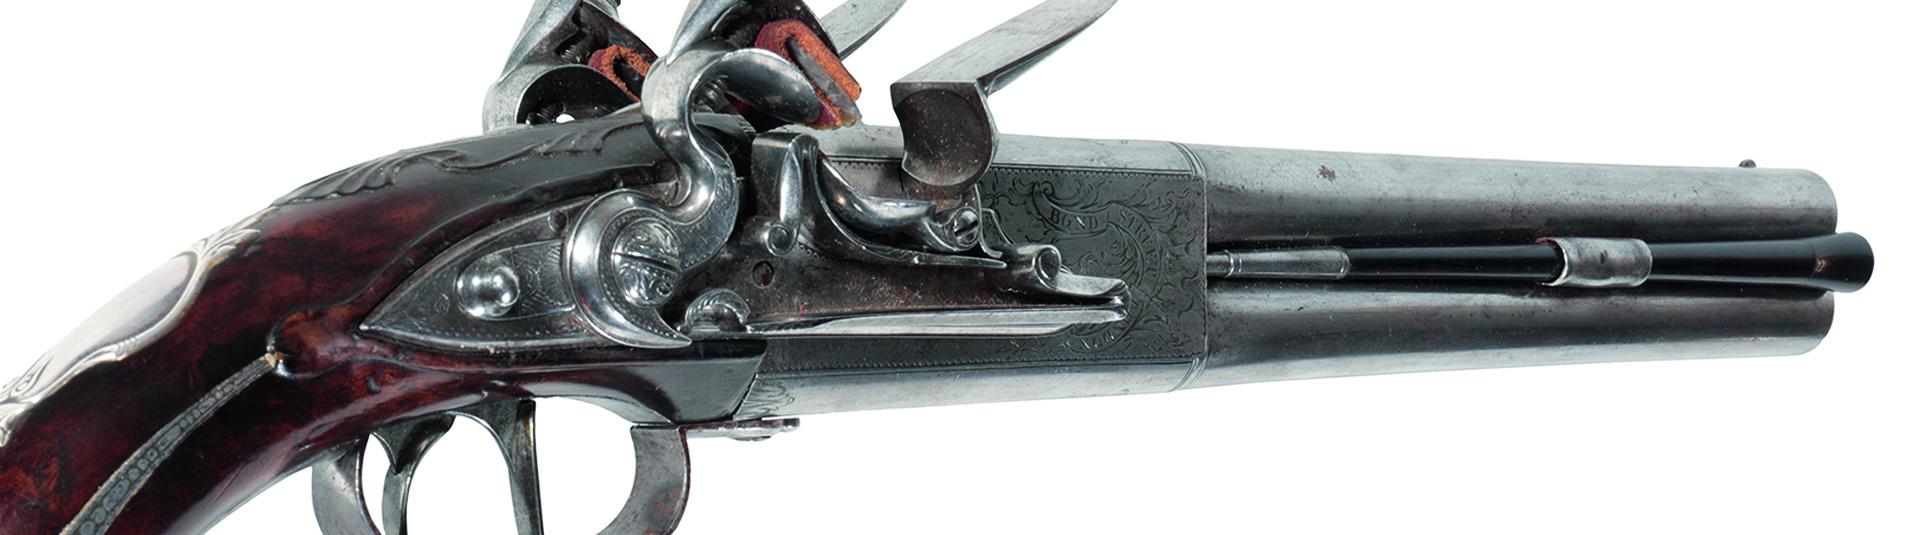 Close-up antique rifle 2020